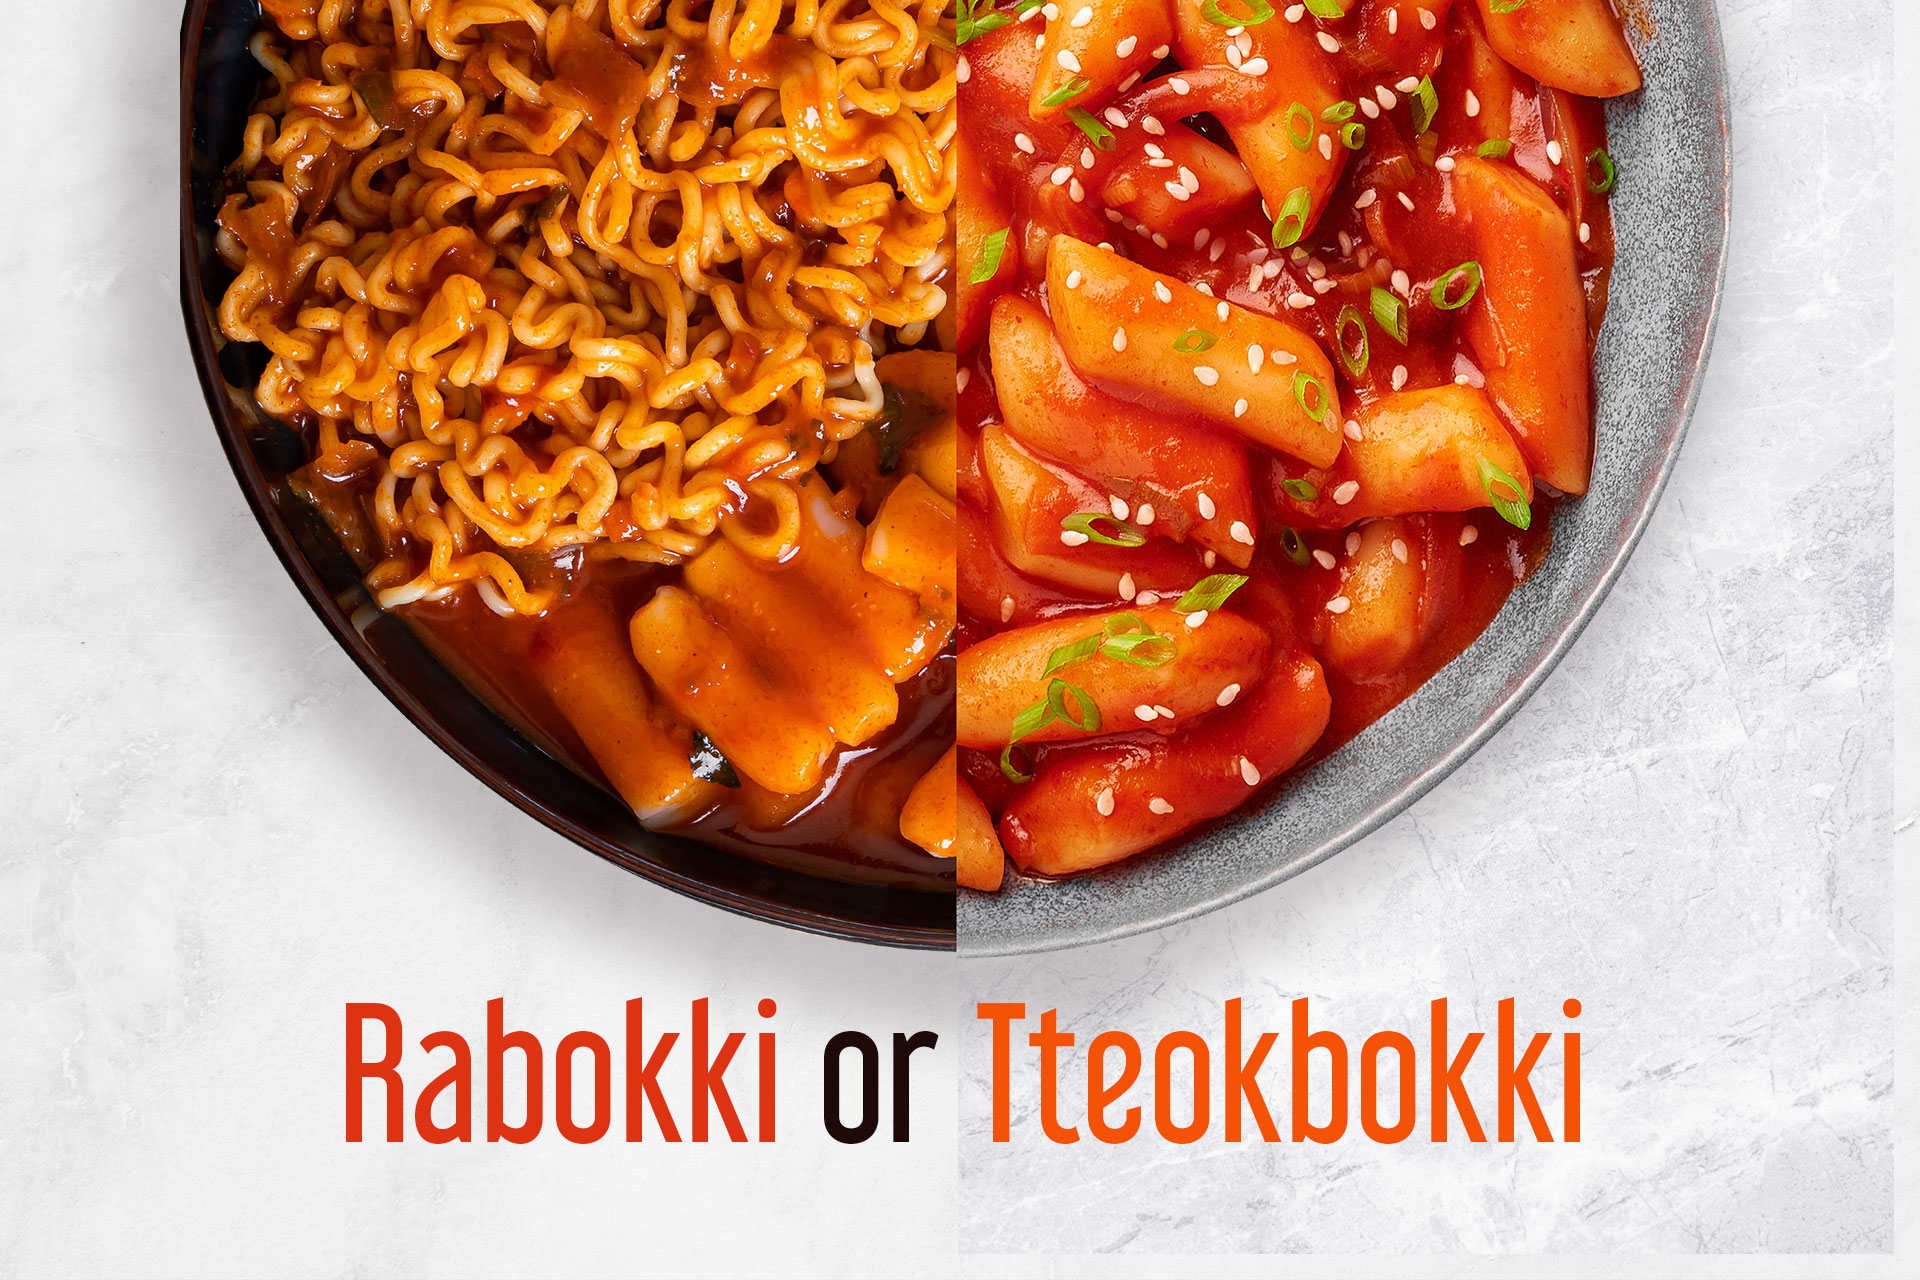 Topokki, Tteokbokki, Tteok-bokki, Toppoki, or just a Rice Cake?